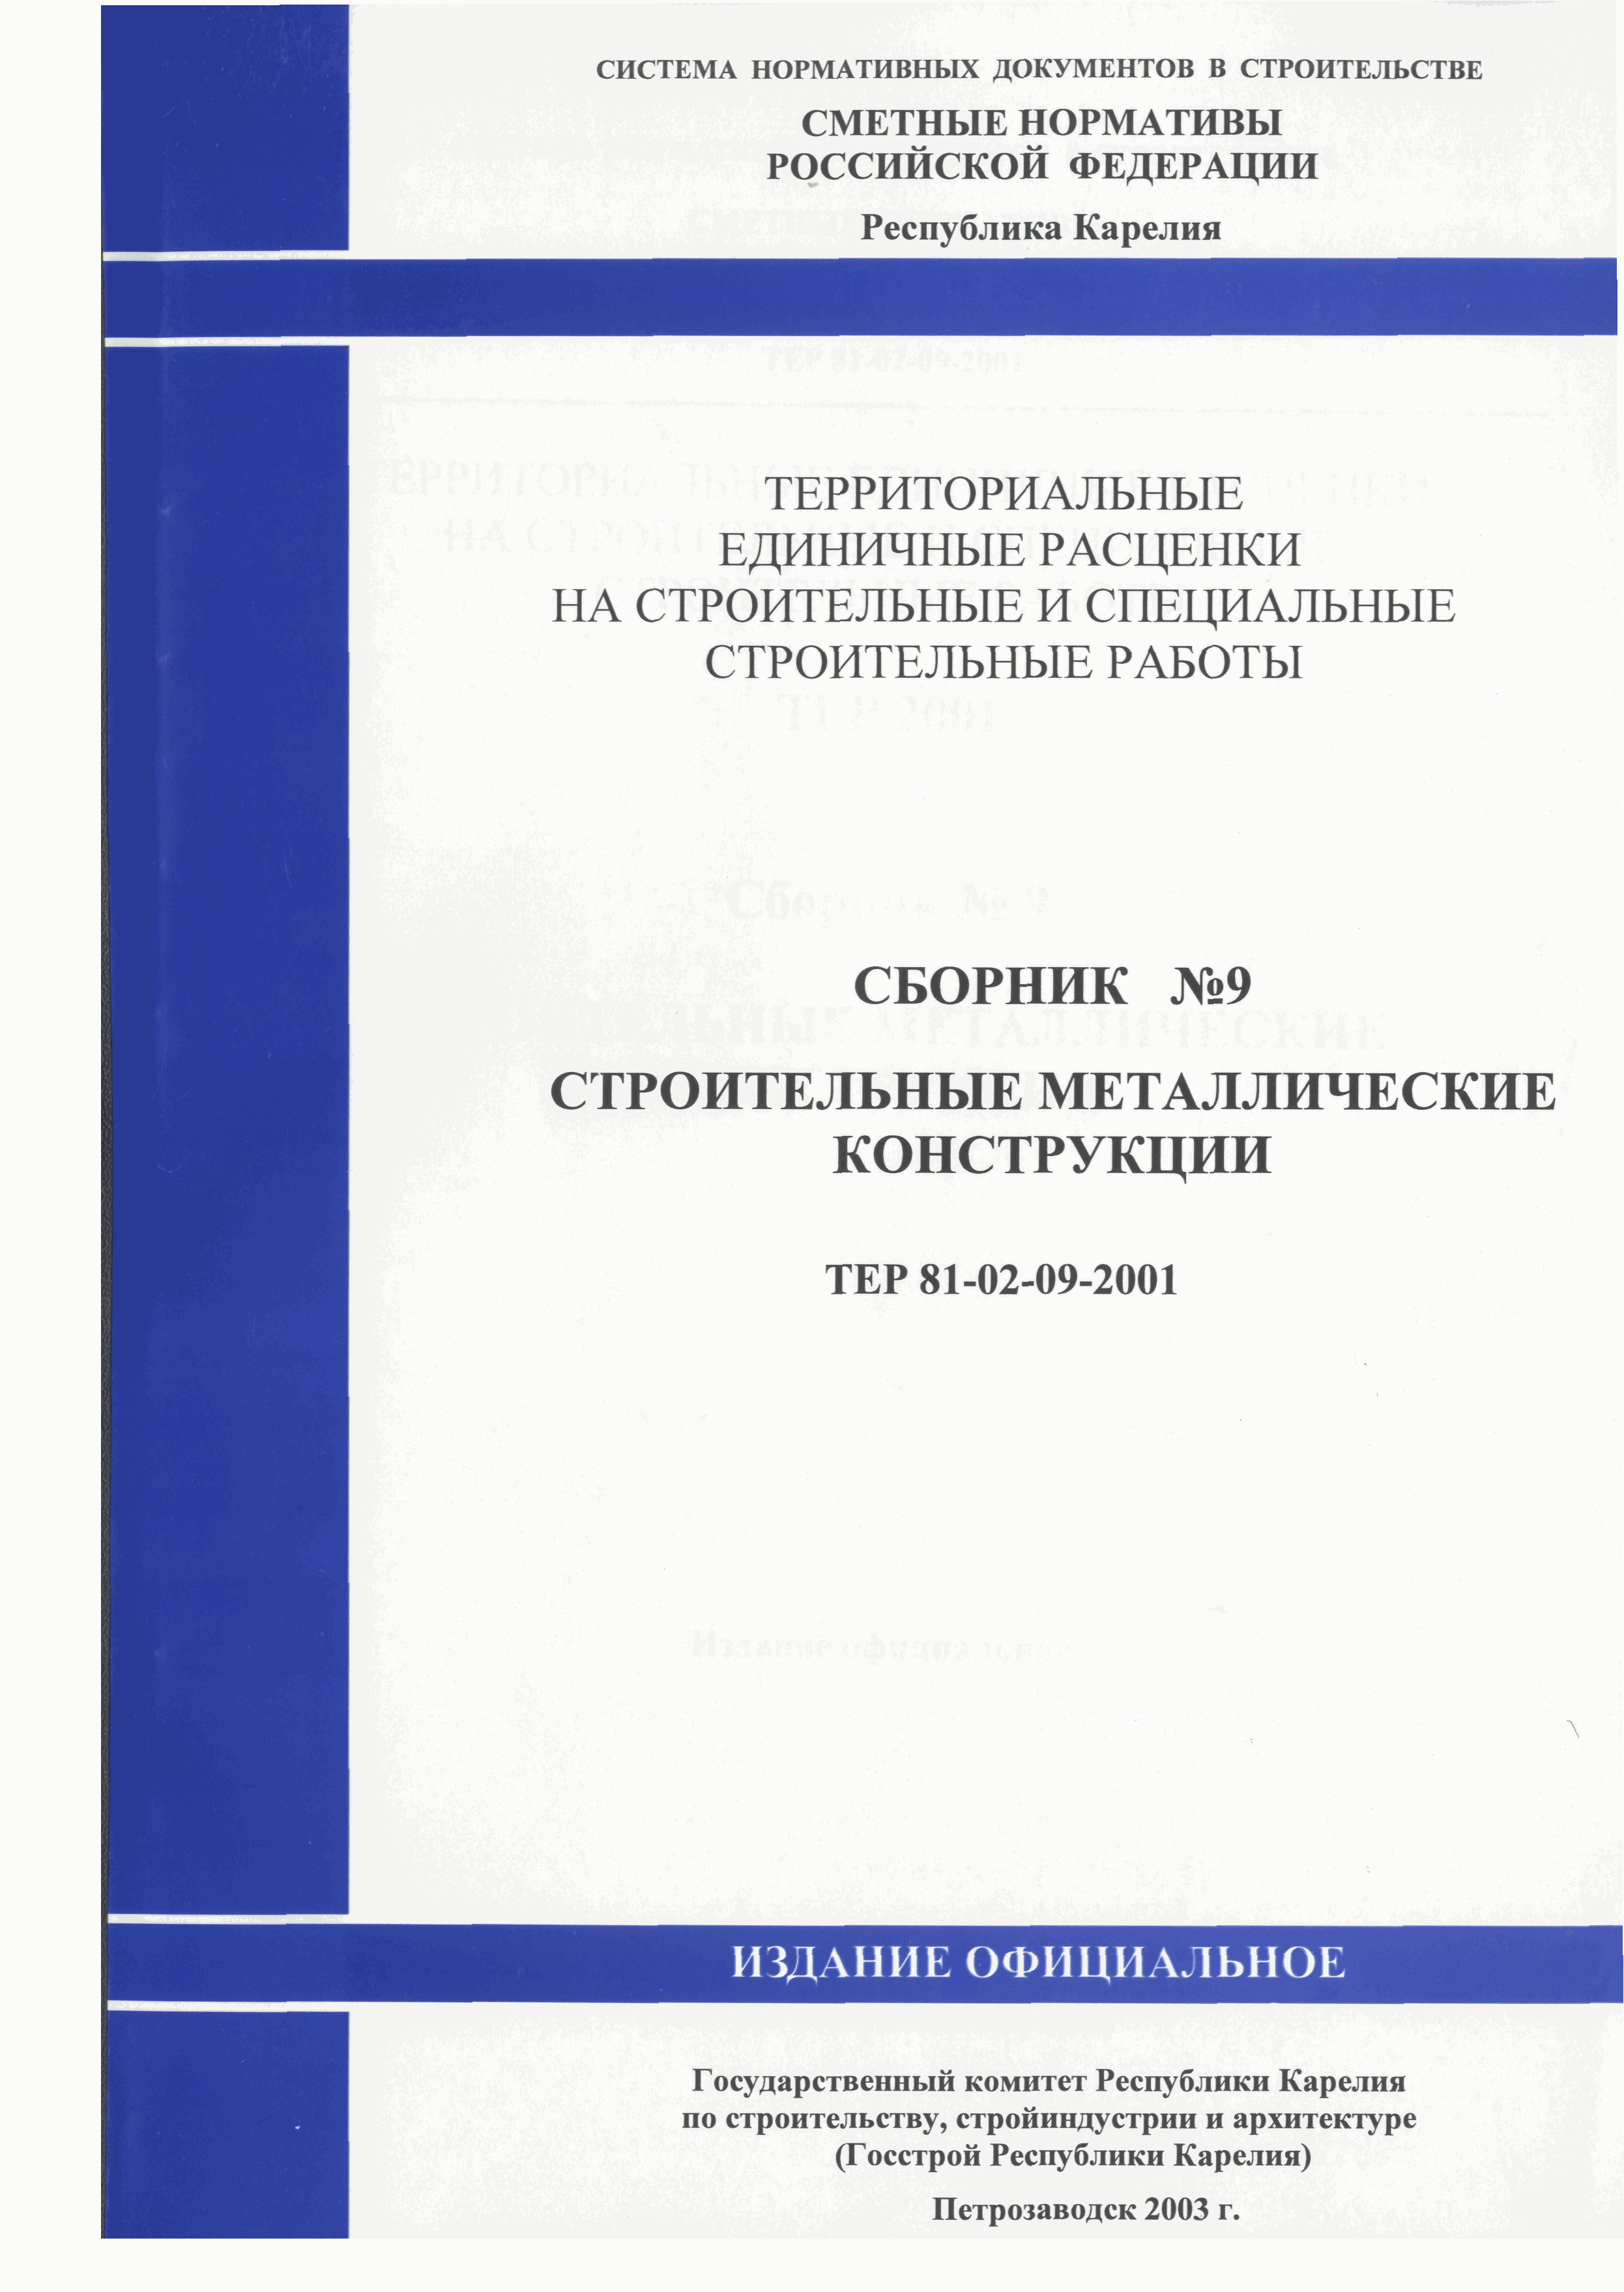 ТЕР Республика Карелия 2001-09